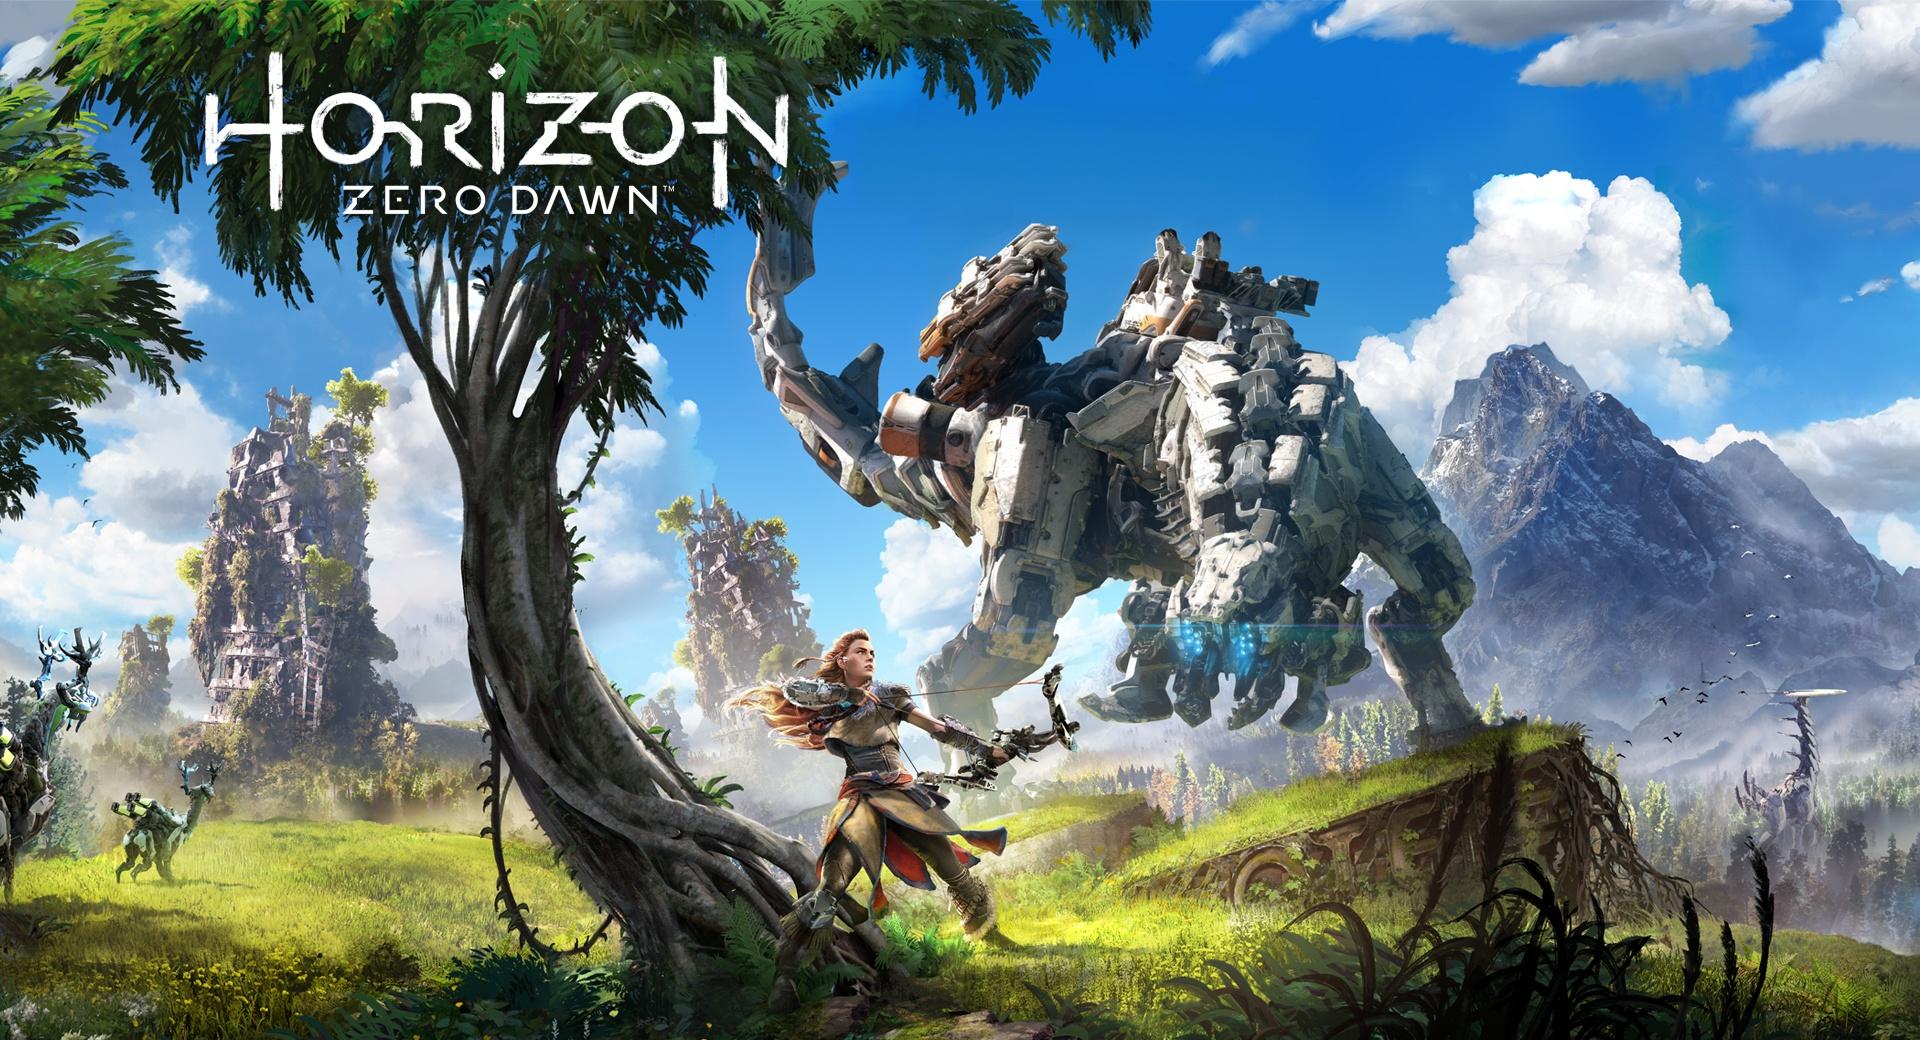 Horizon Zero Dawn 2017 Video Game at 1152 x 864 size wallpapers HD quality